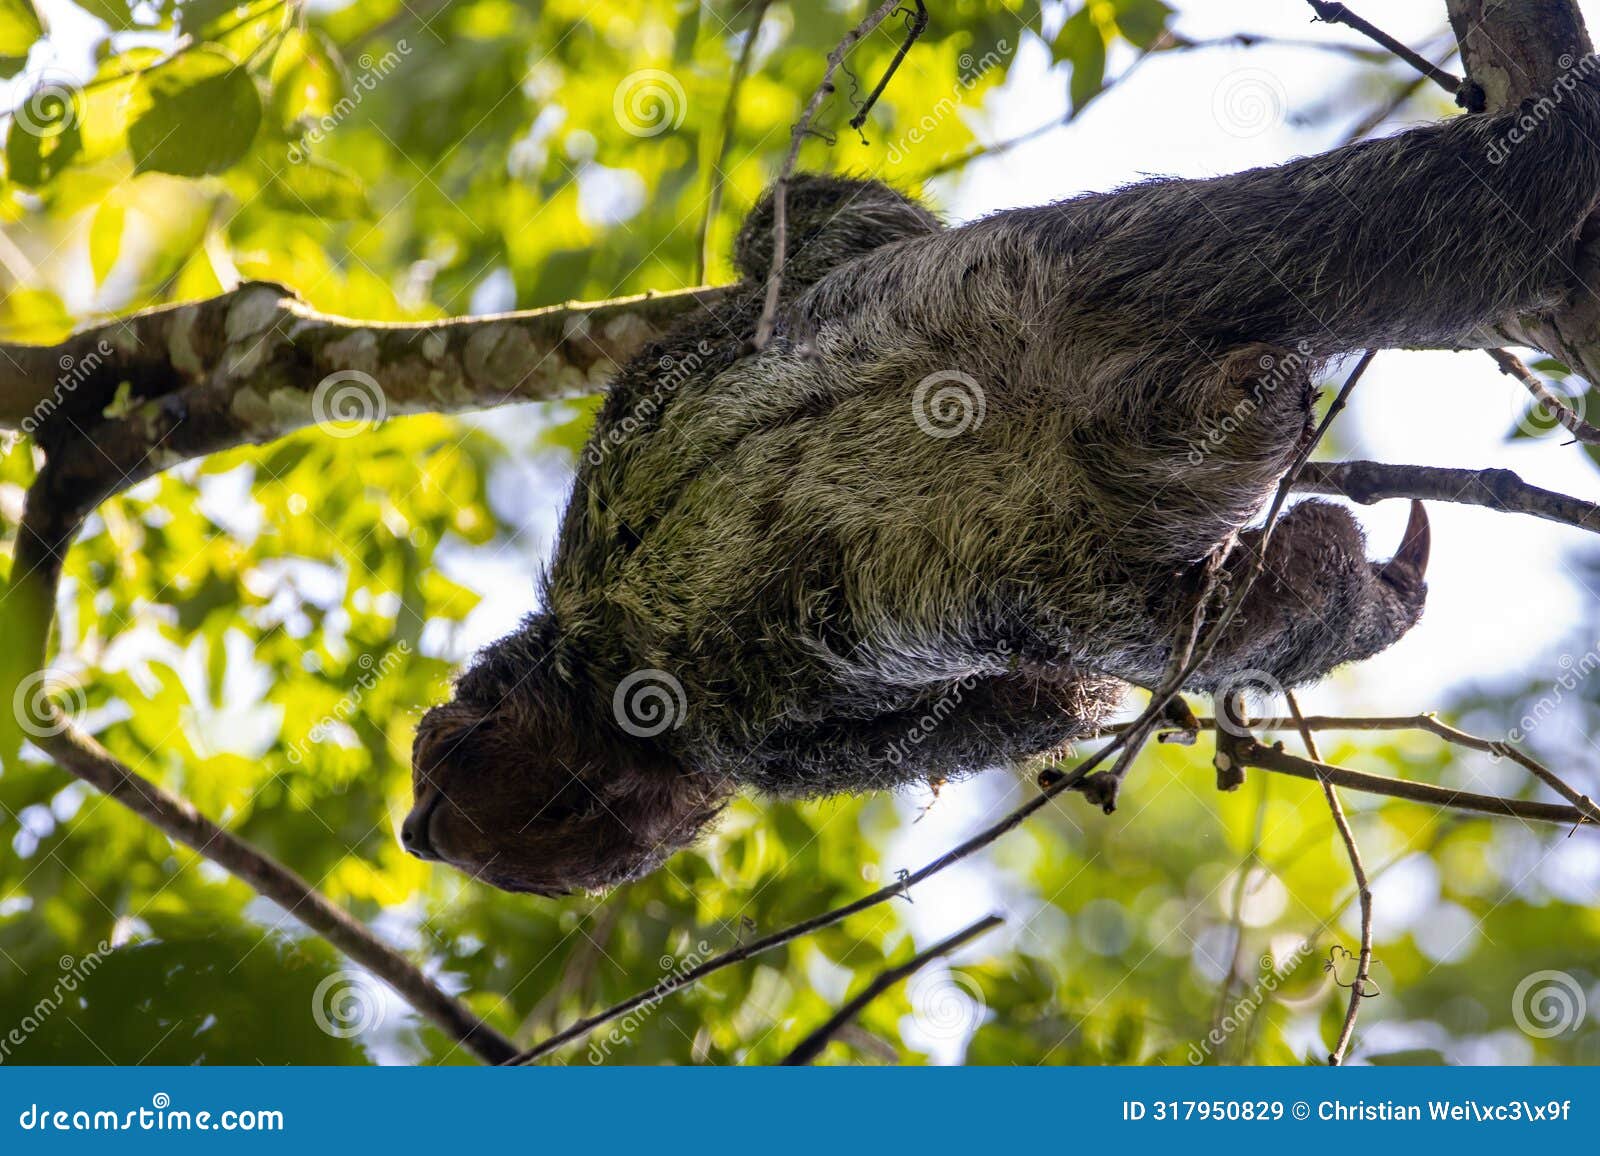 brown throated sloth, bradypus variegatus, in a tree